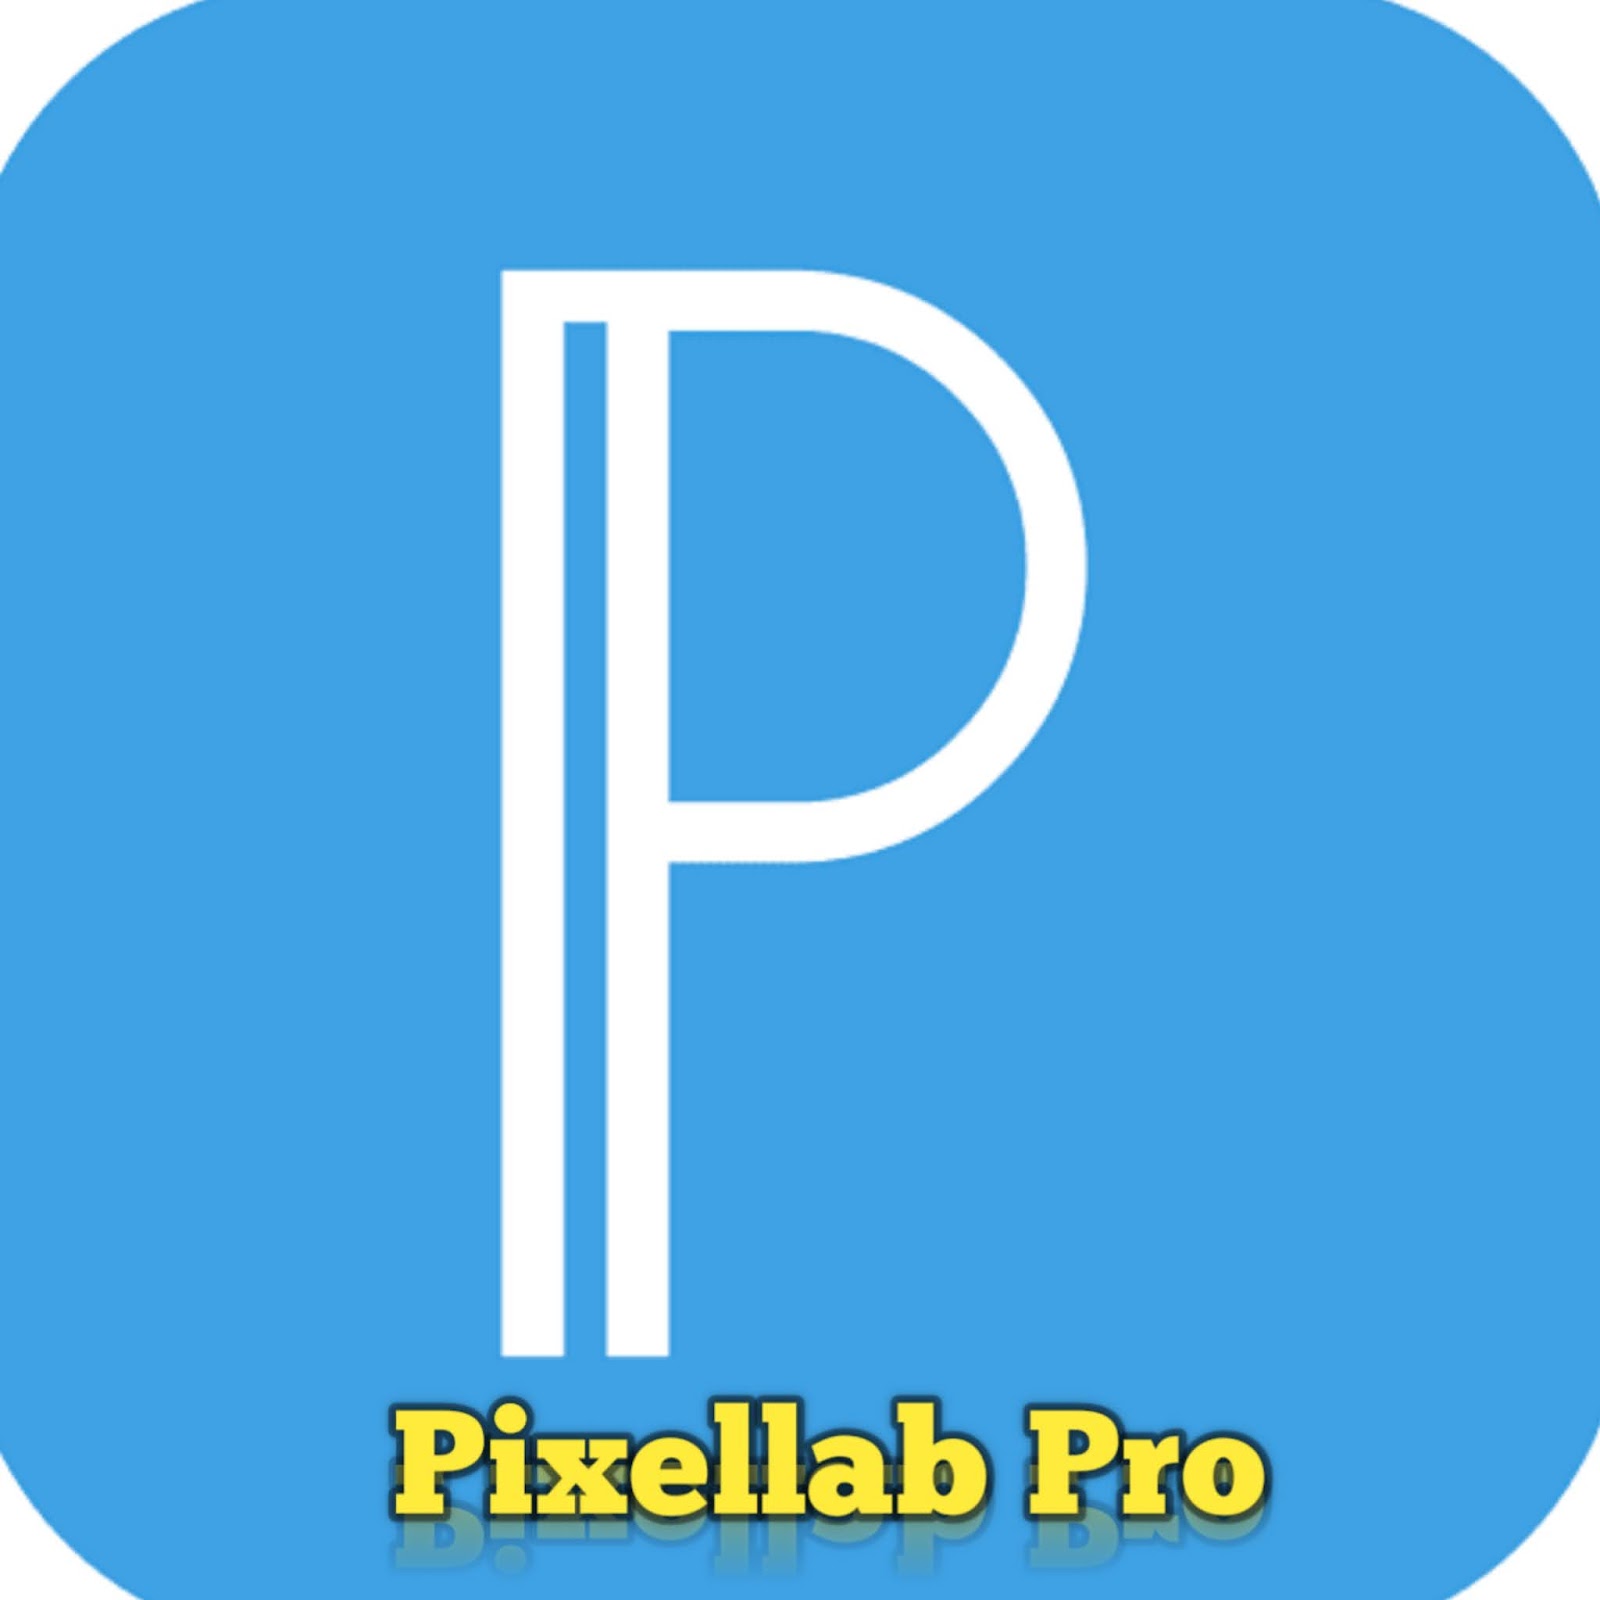 Pixellab Pro